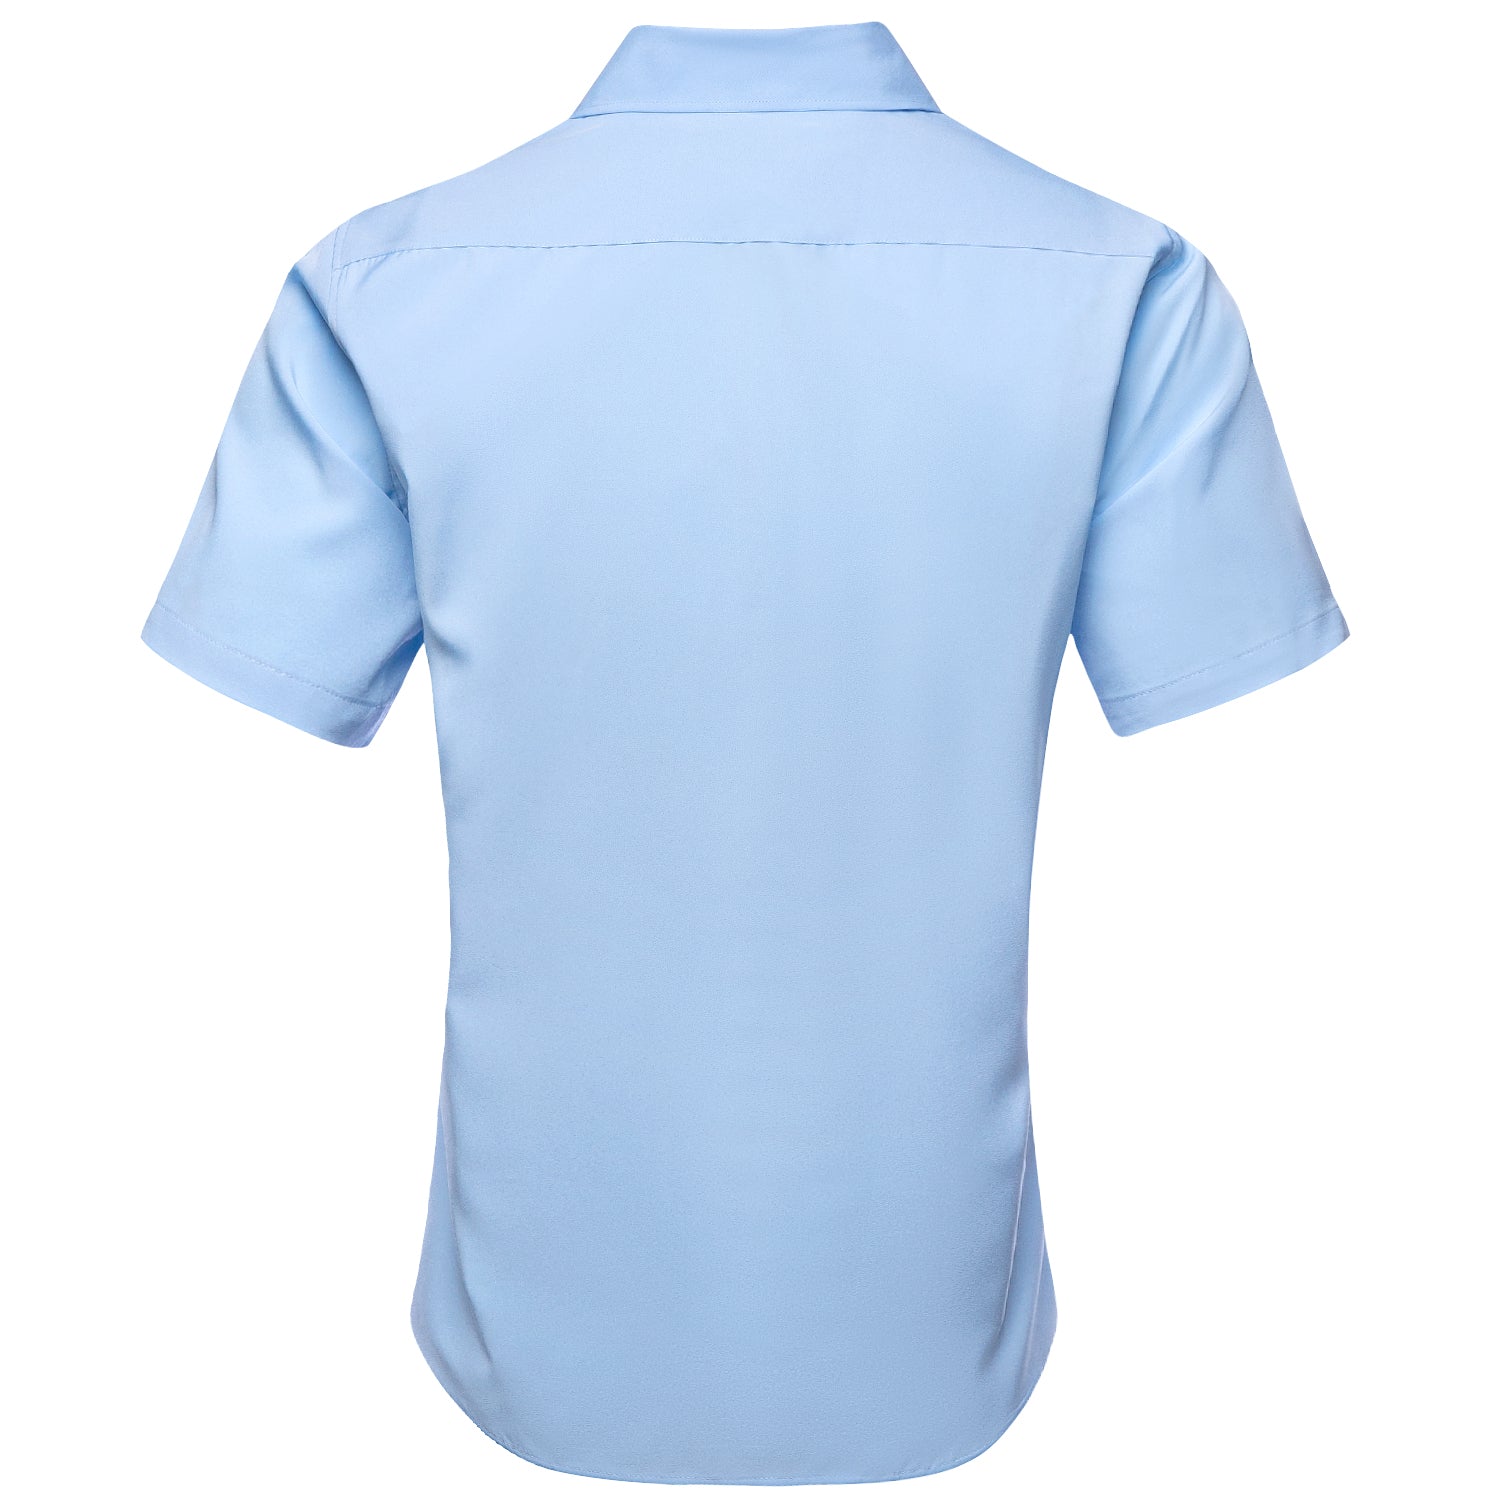 Sky Blue Solid Silk Men's Short Sleeve Shirt